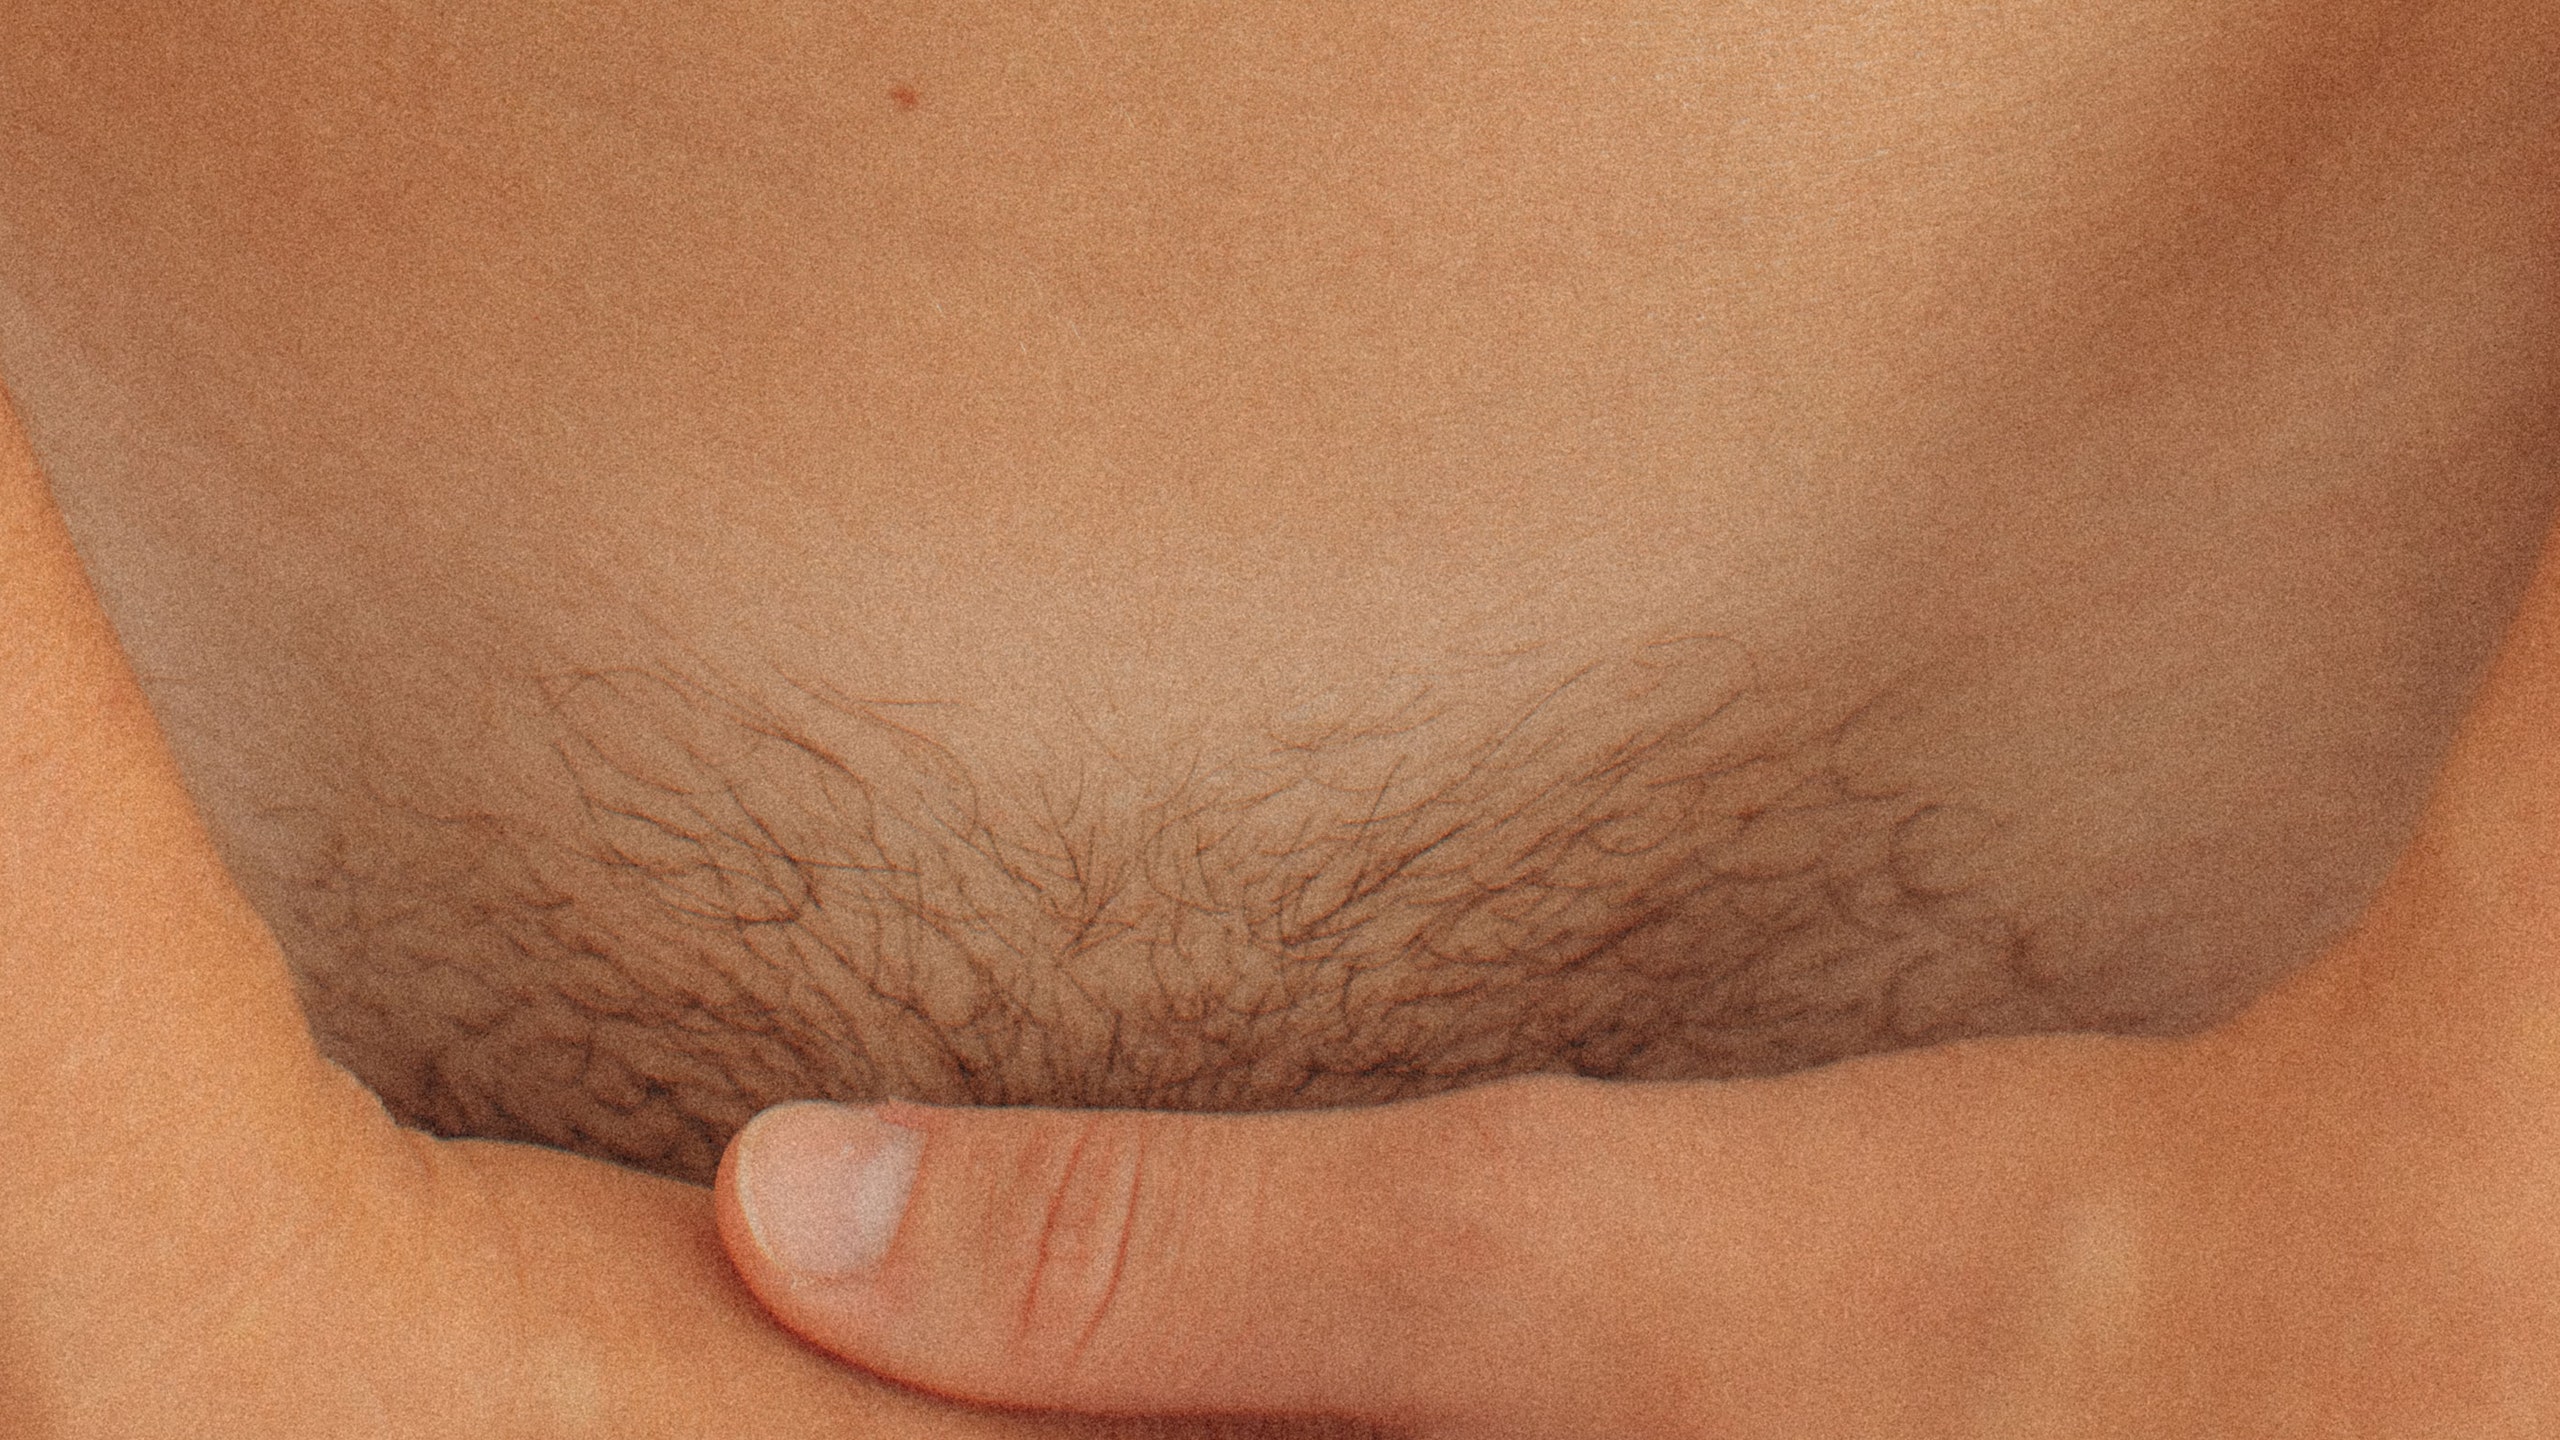 brandon beckford recommends naturally hairless vagina pic